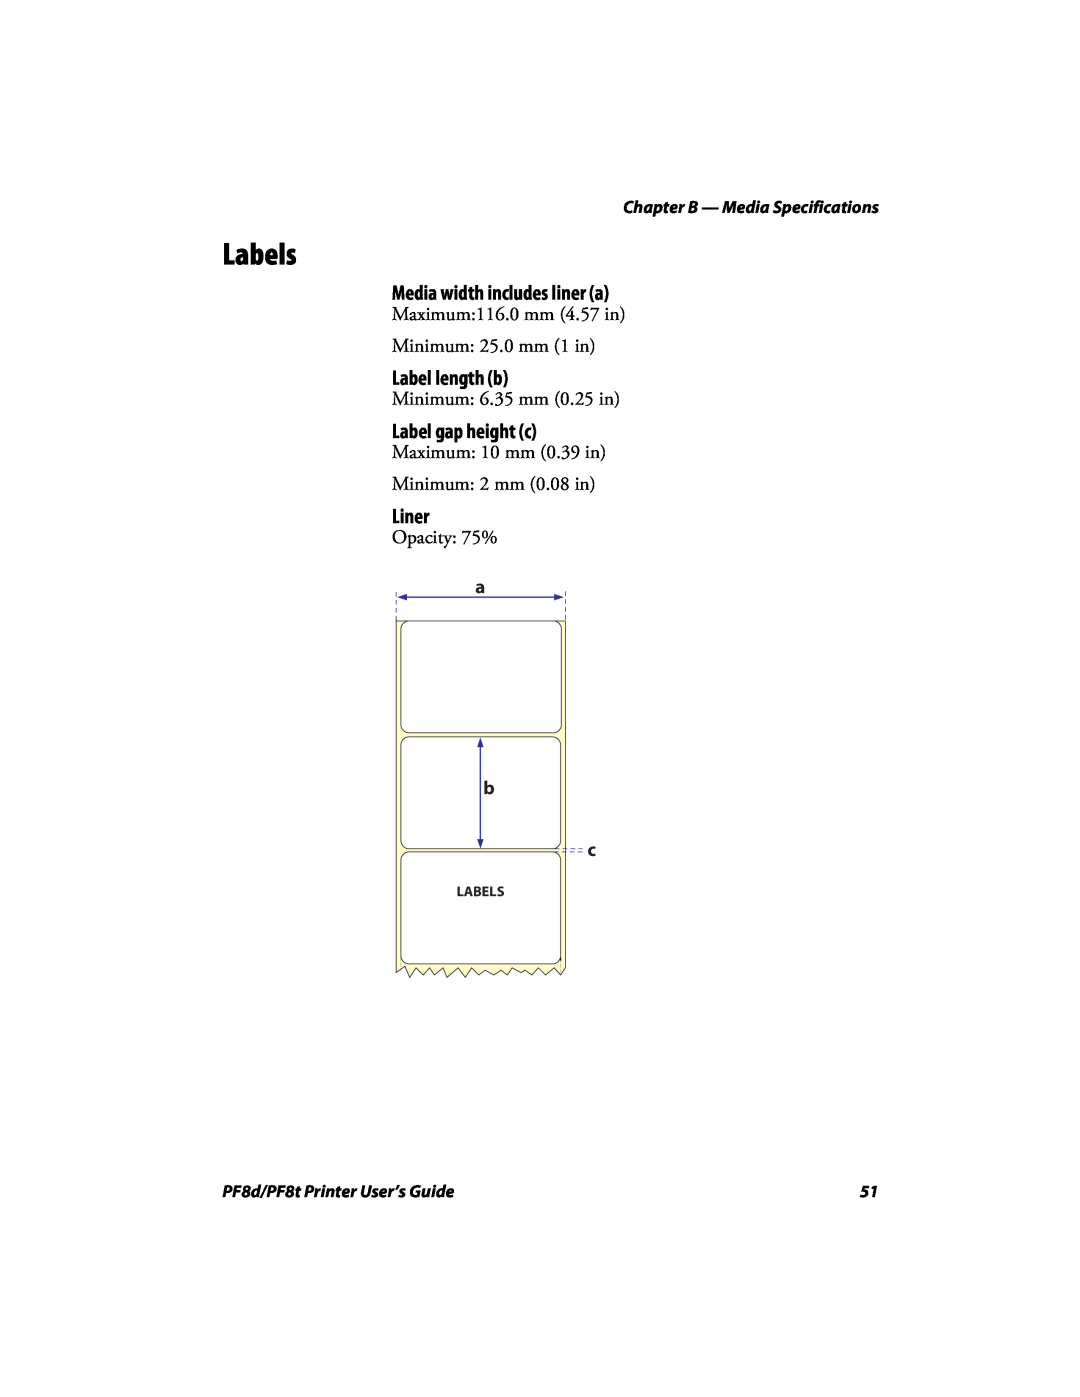 Intermec PF8T, PF8D manual Labels, a b c, Chapter B - Media Specifications, PF8d/PF8t Printer User’s Guide 